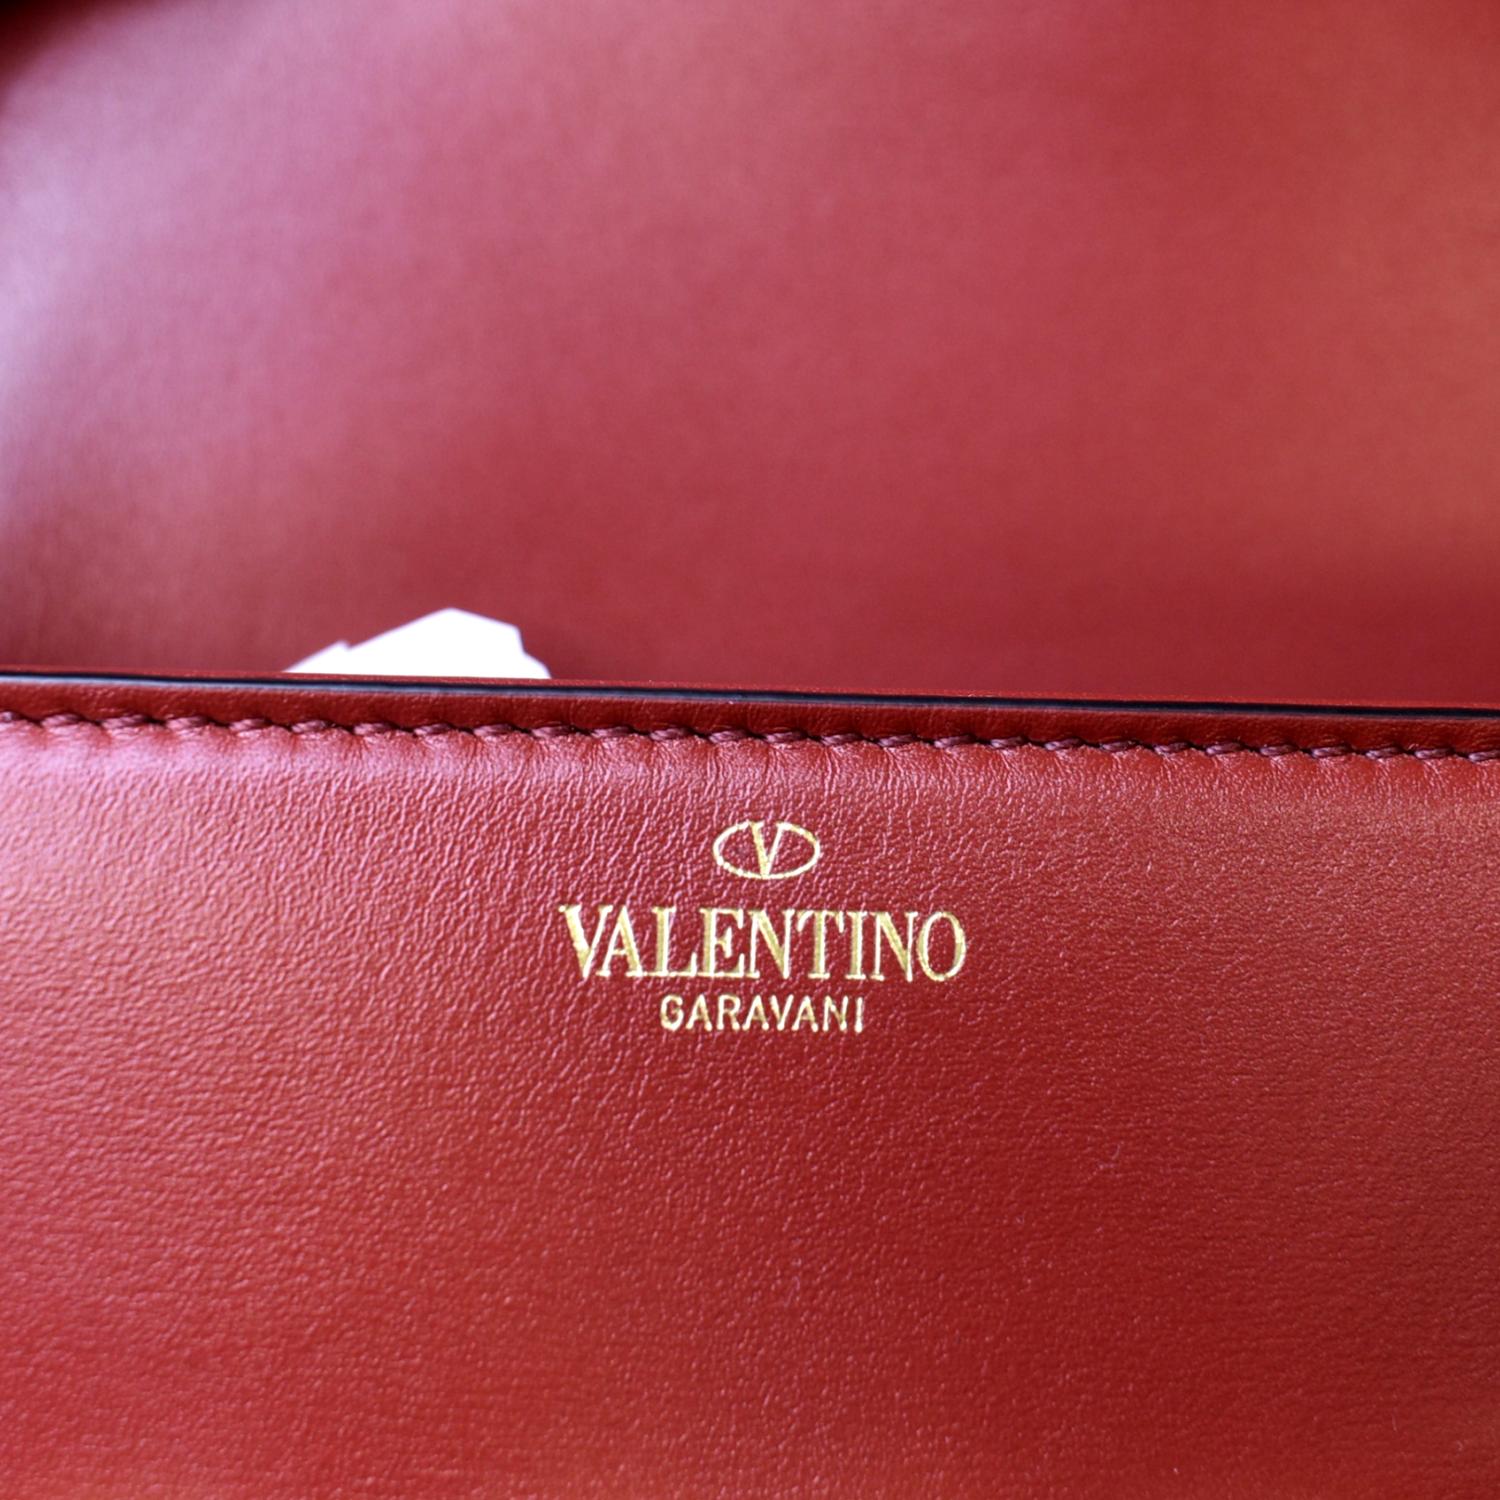 New Auth Valentino Garavani V Rivet Chain Suede Clutch Bag Handbag Purse  $1495